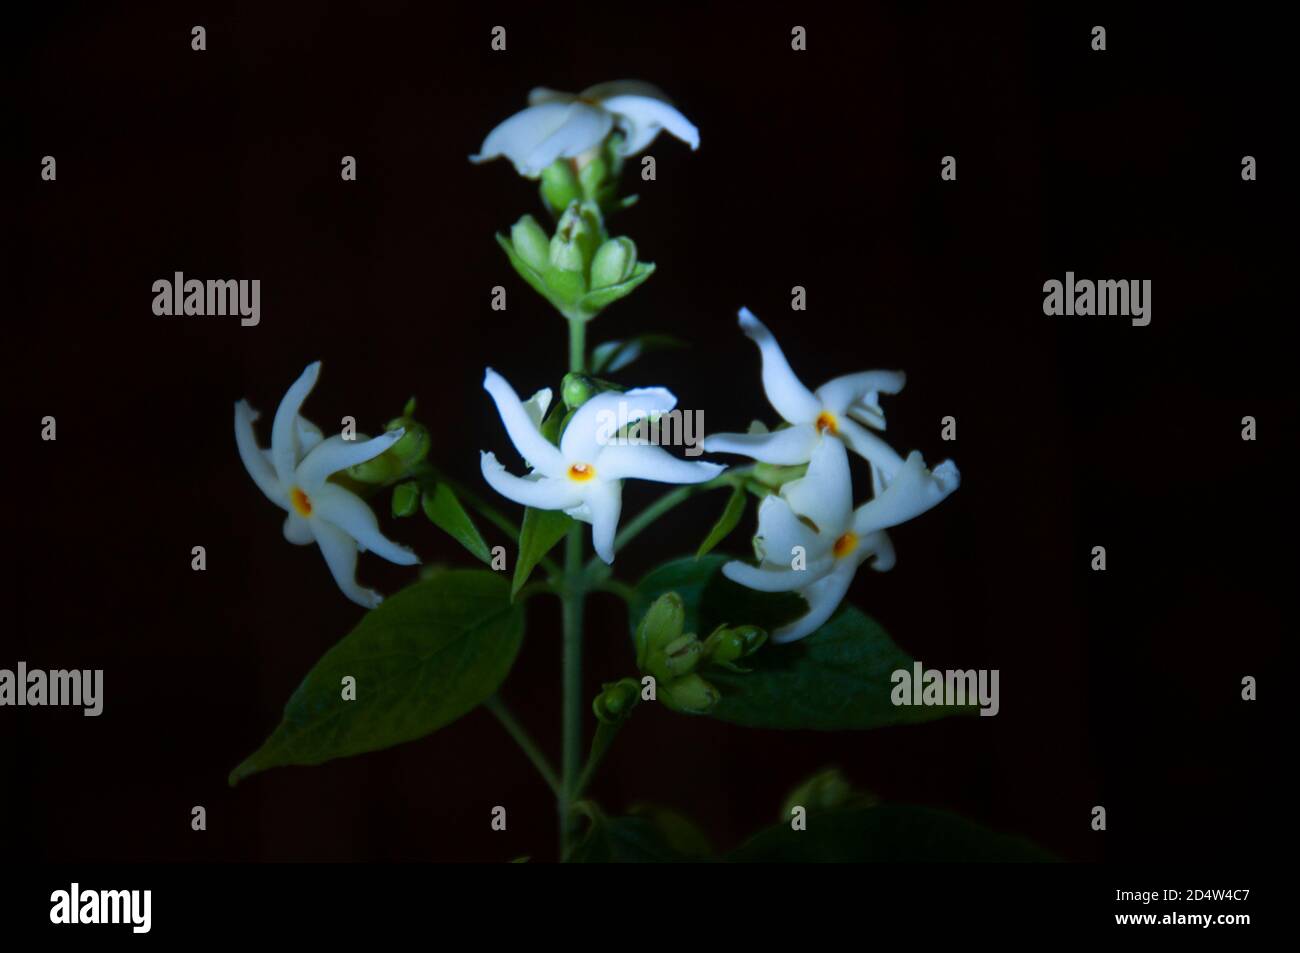 night flowering jasmine or shiuli in bengali bloom at night Stock Photo